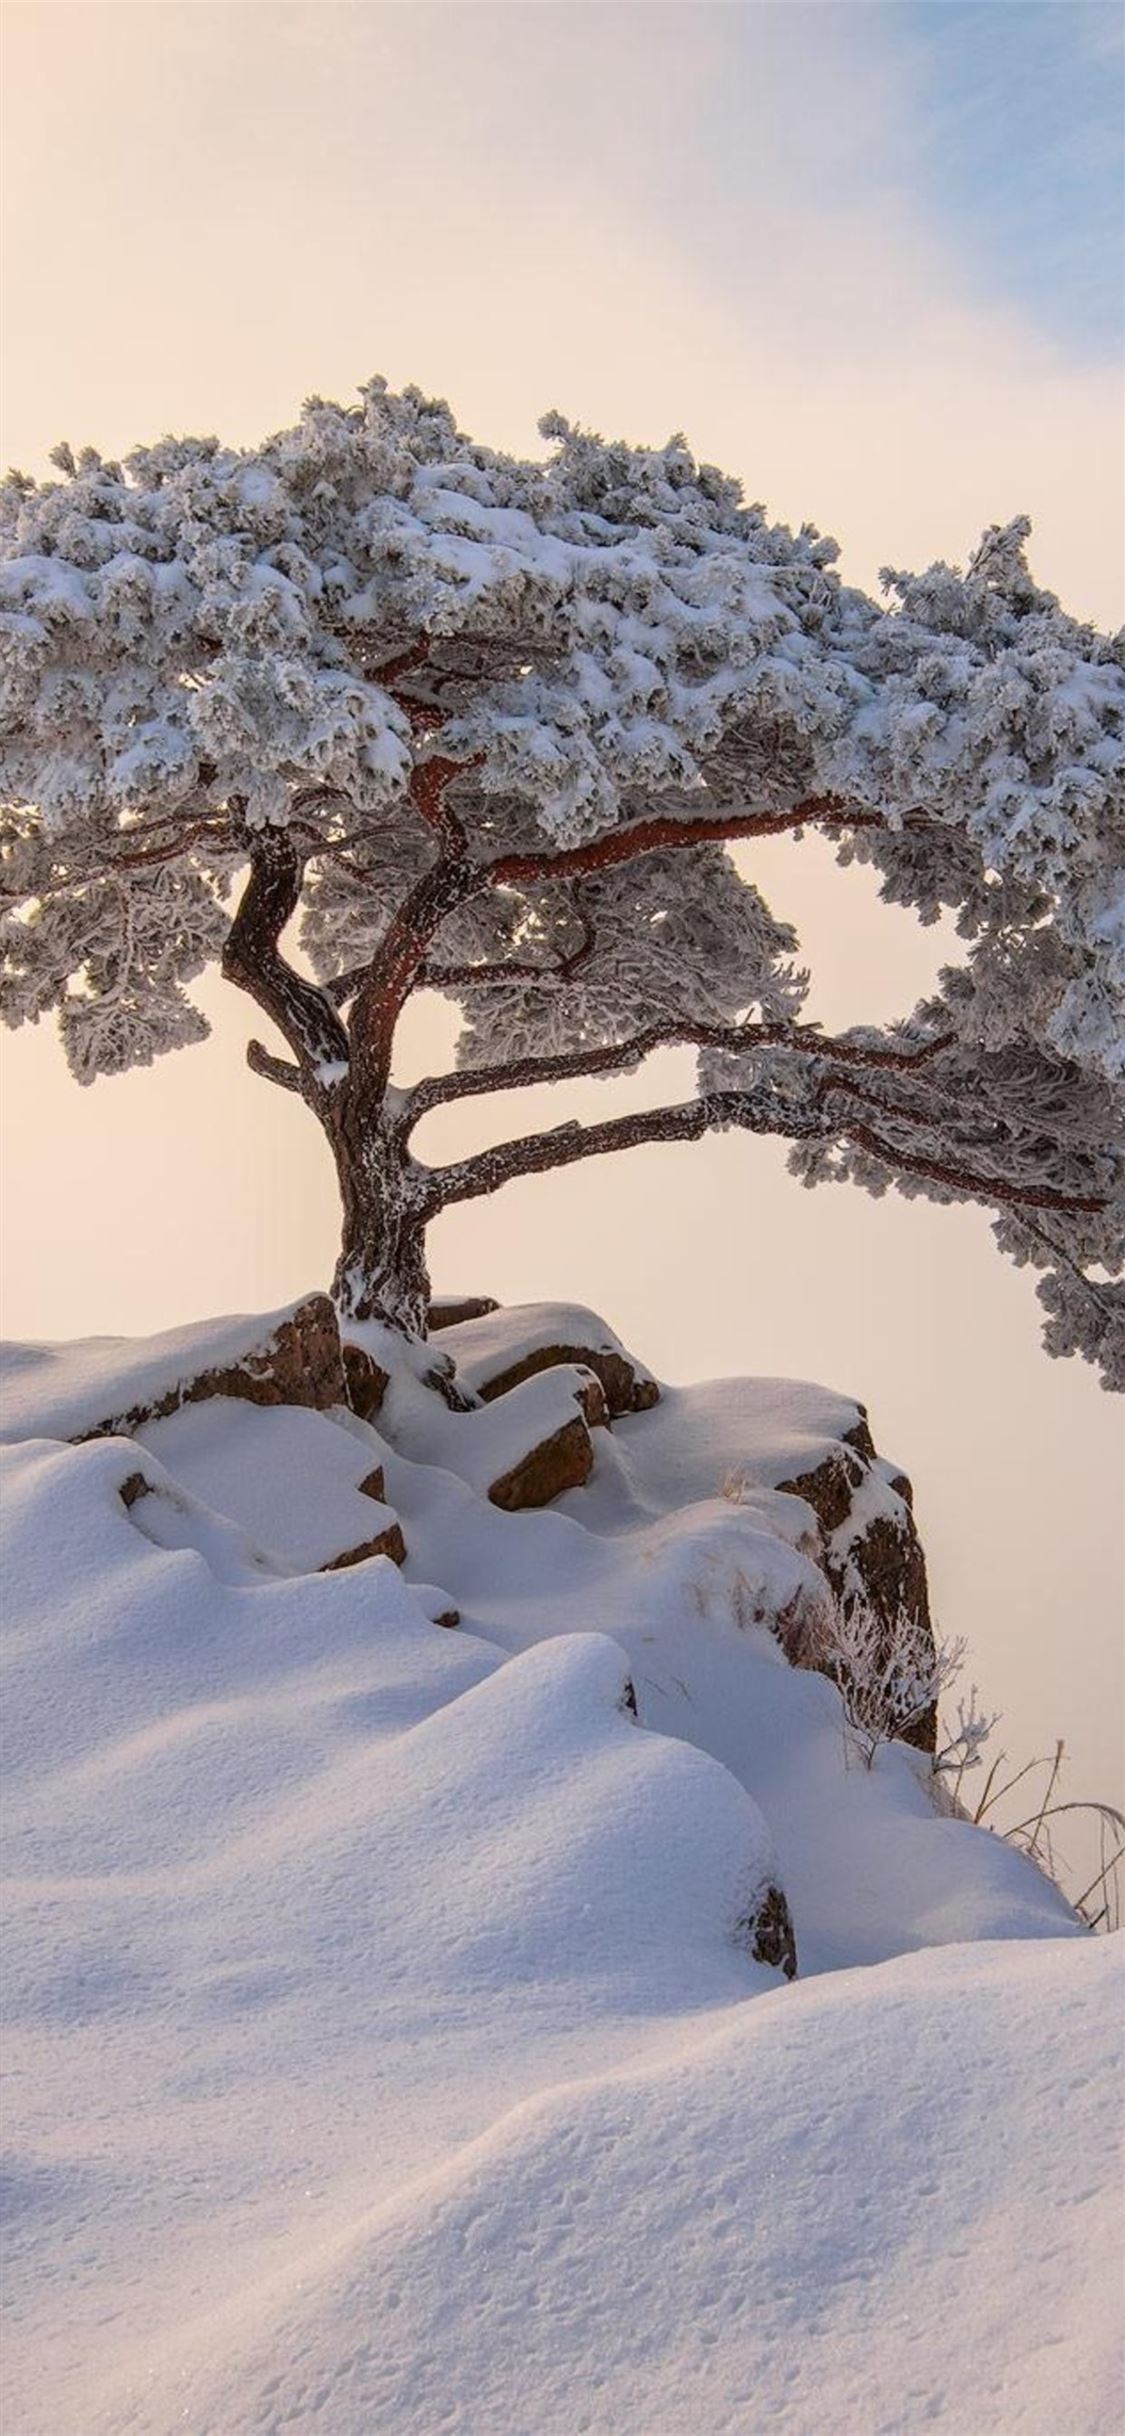 south korea december winter iPhone X Wallpaper Free Download